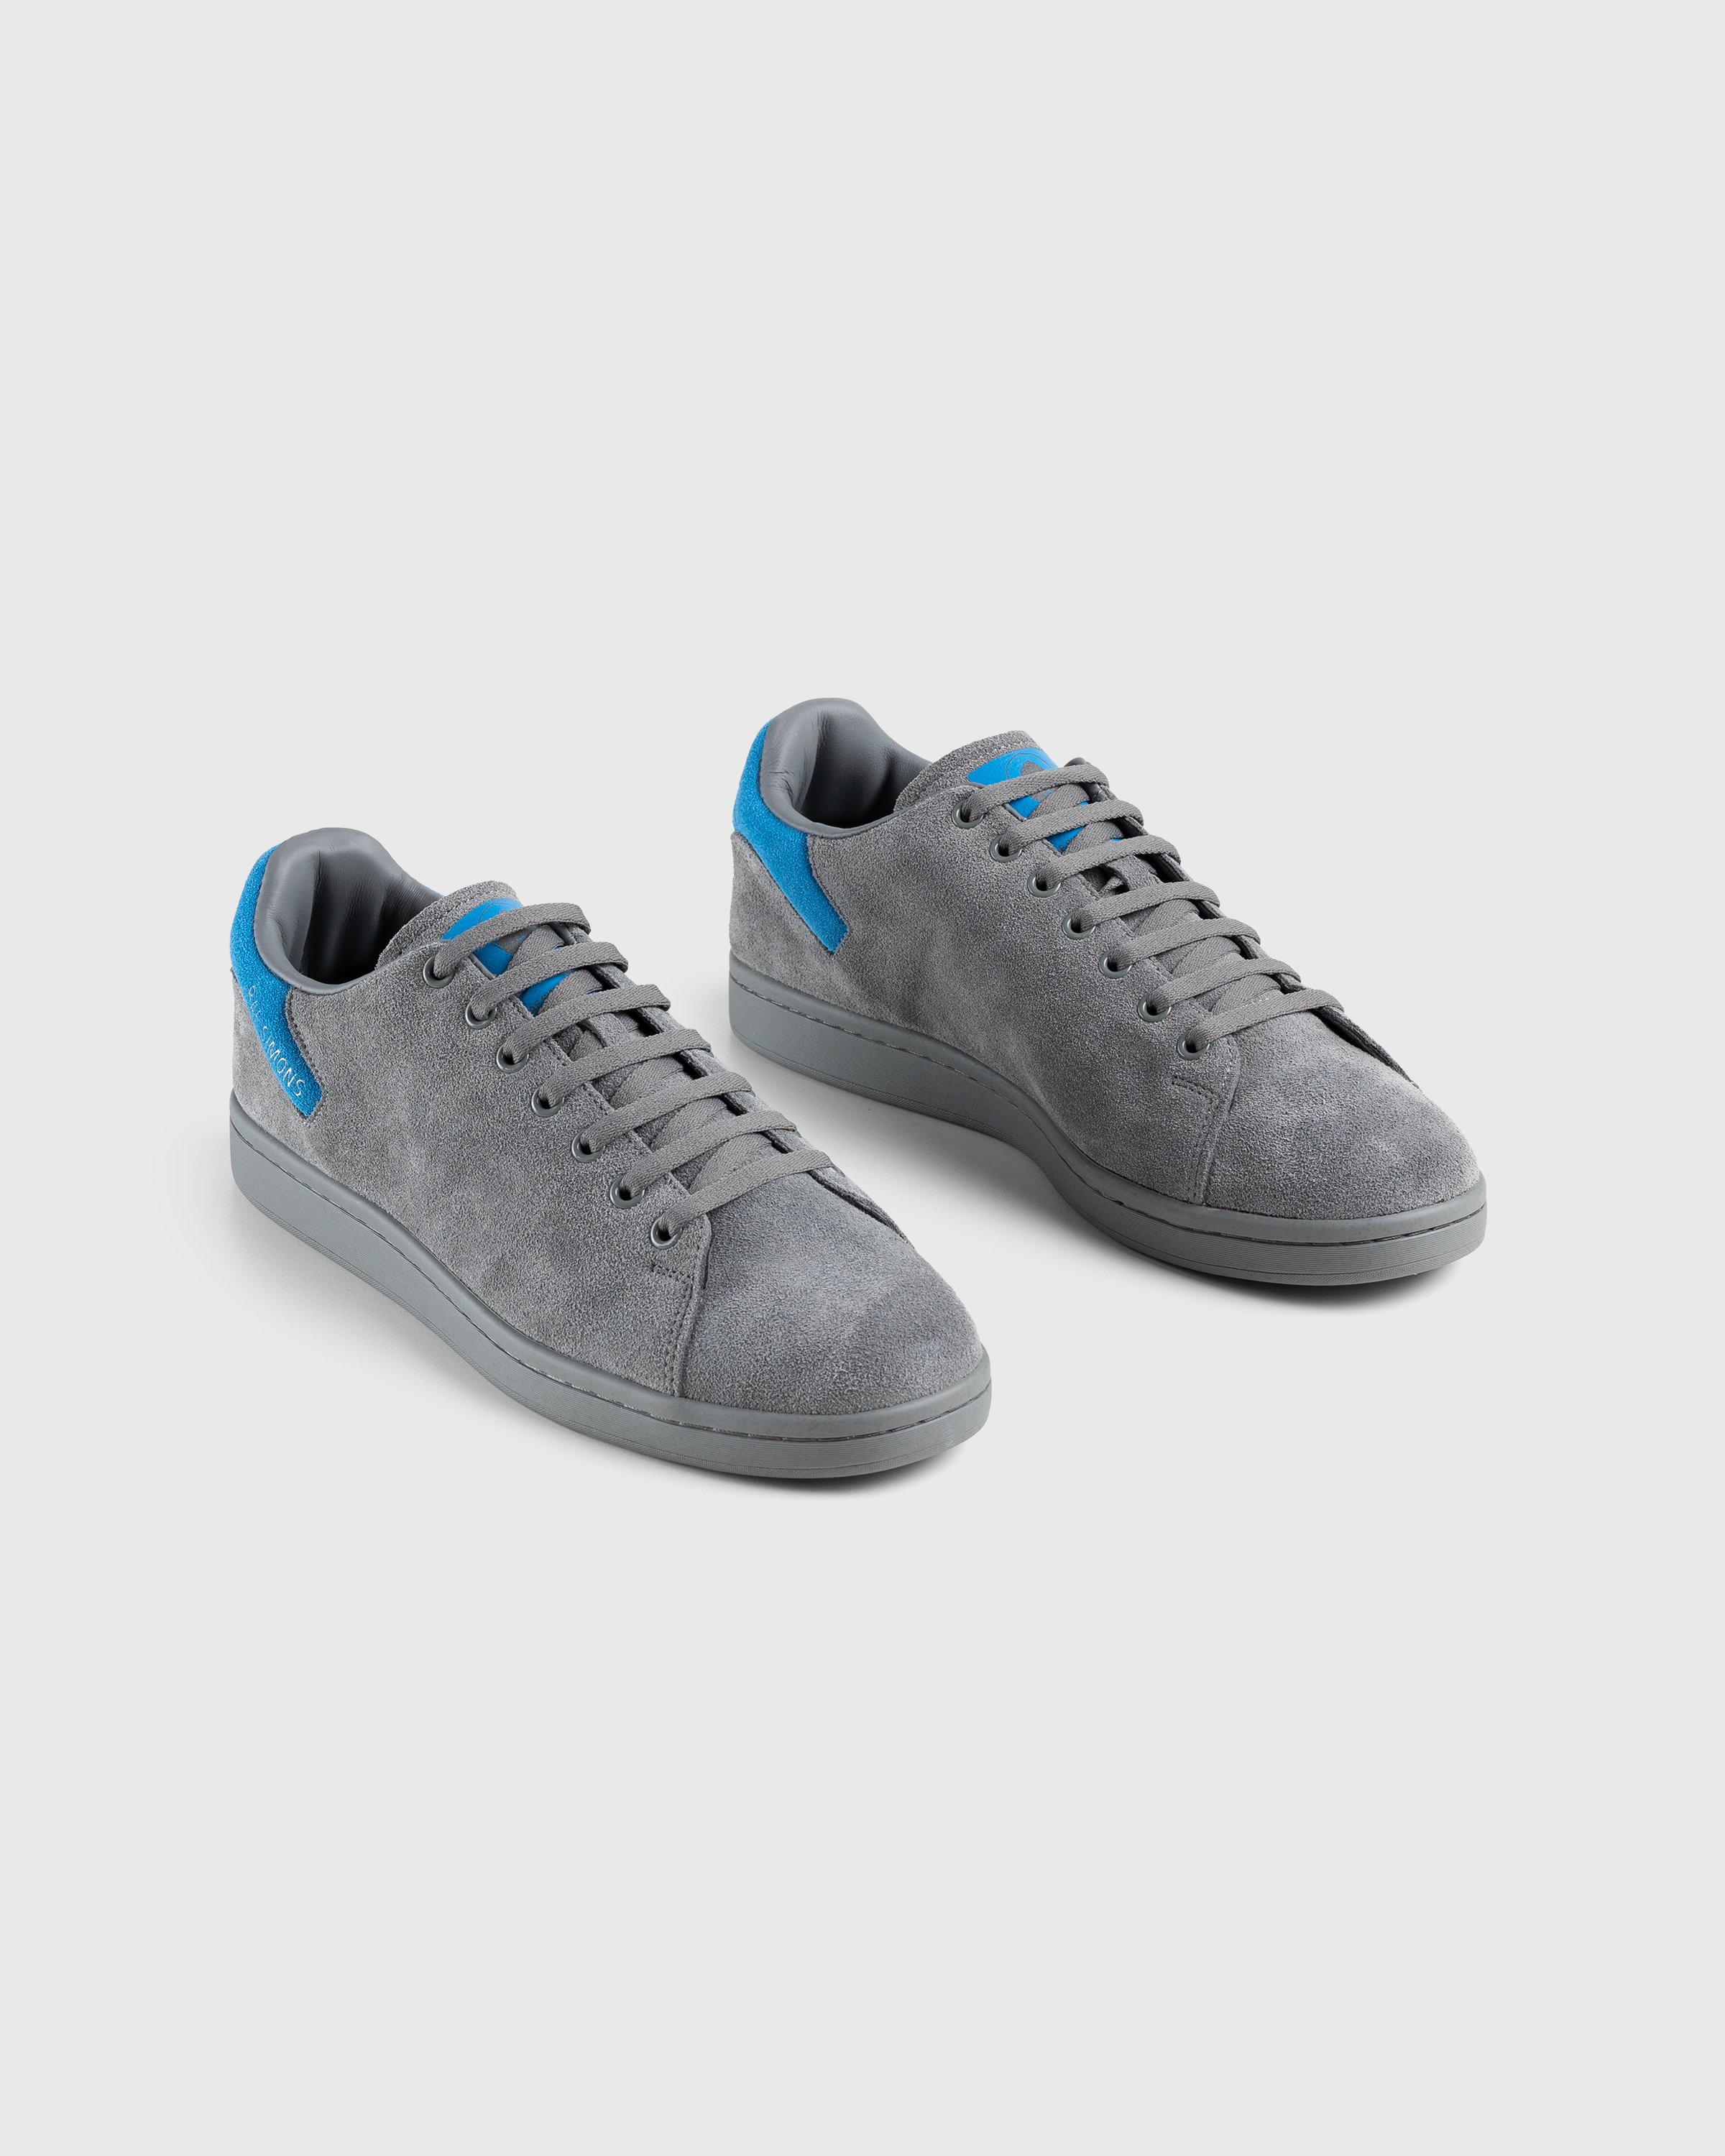 Raf Simons - Orion Grey - Footwear - Grey - Image 3